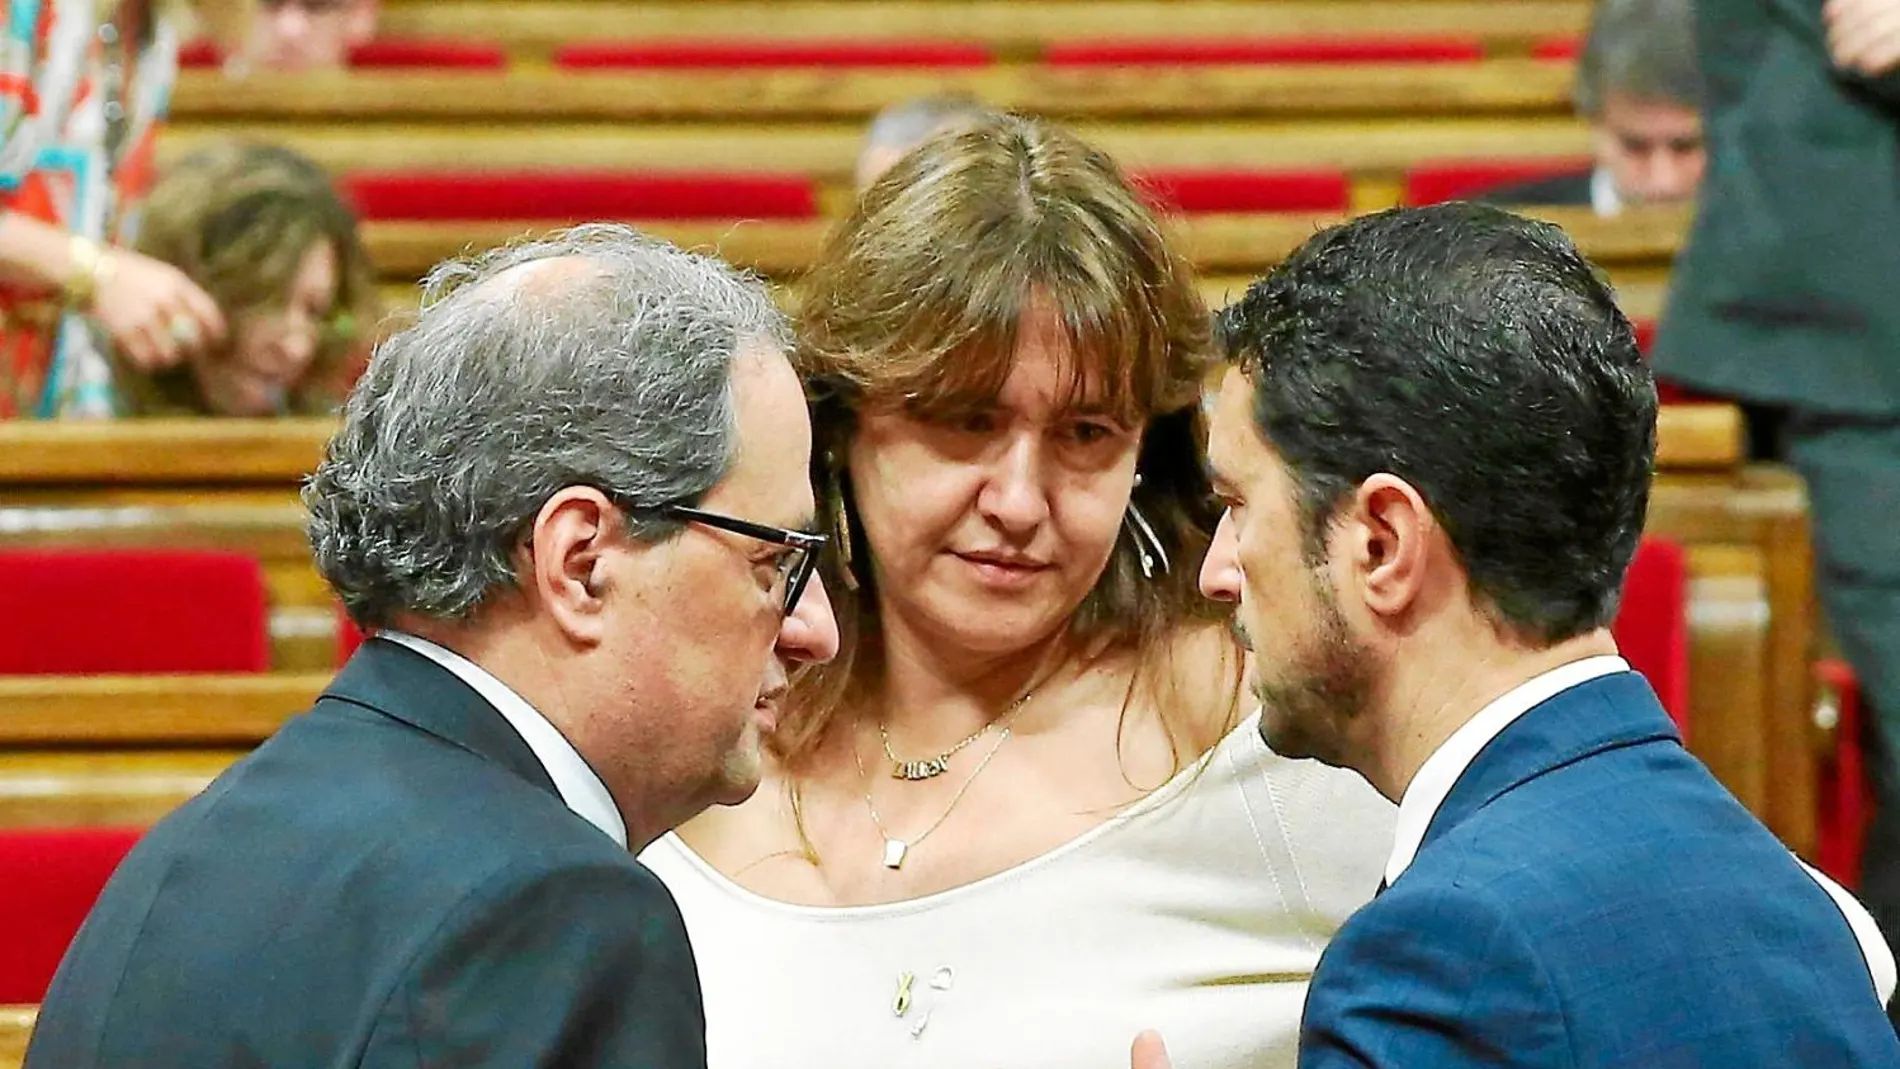 La consellera Laura Borràs, junto al president Quim Torra y el conseller de Territori, Damià Calvet, tras una sesión parlamentaria